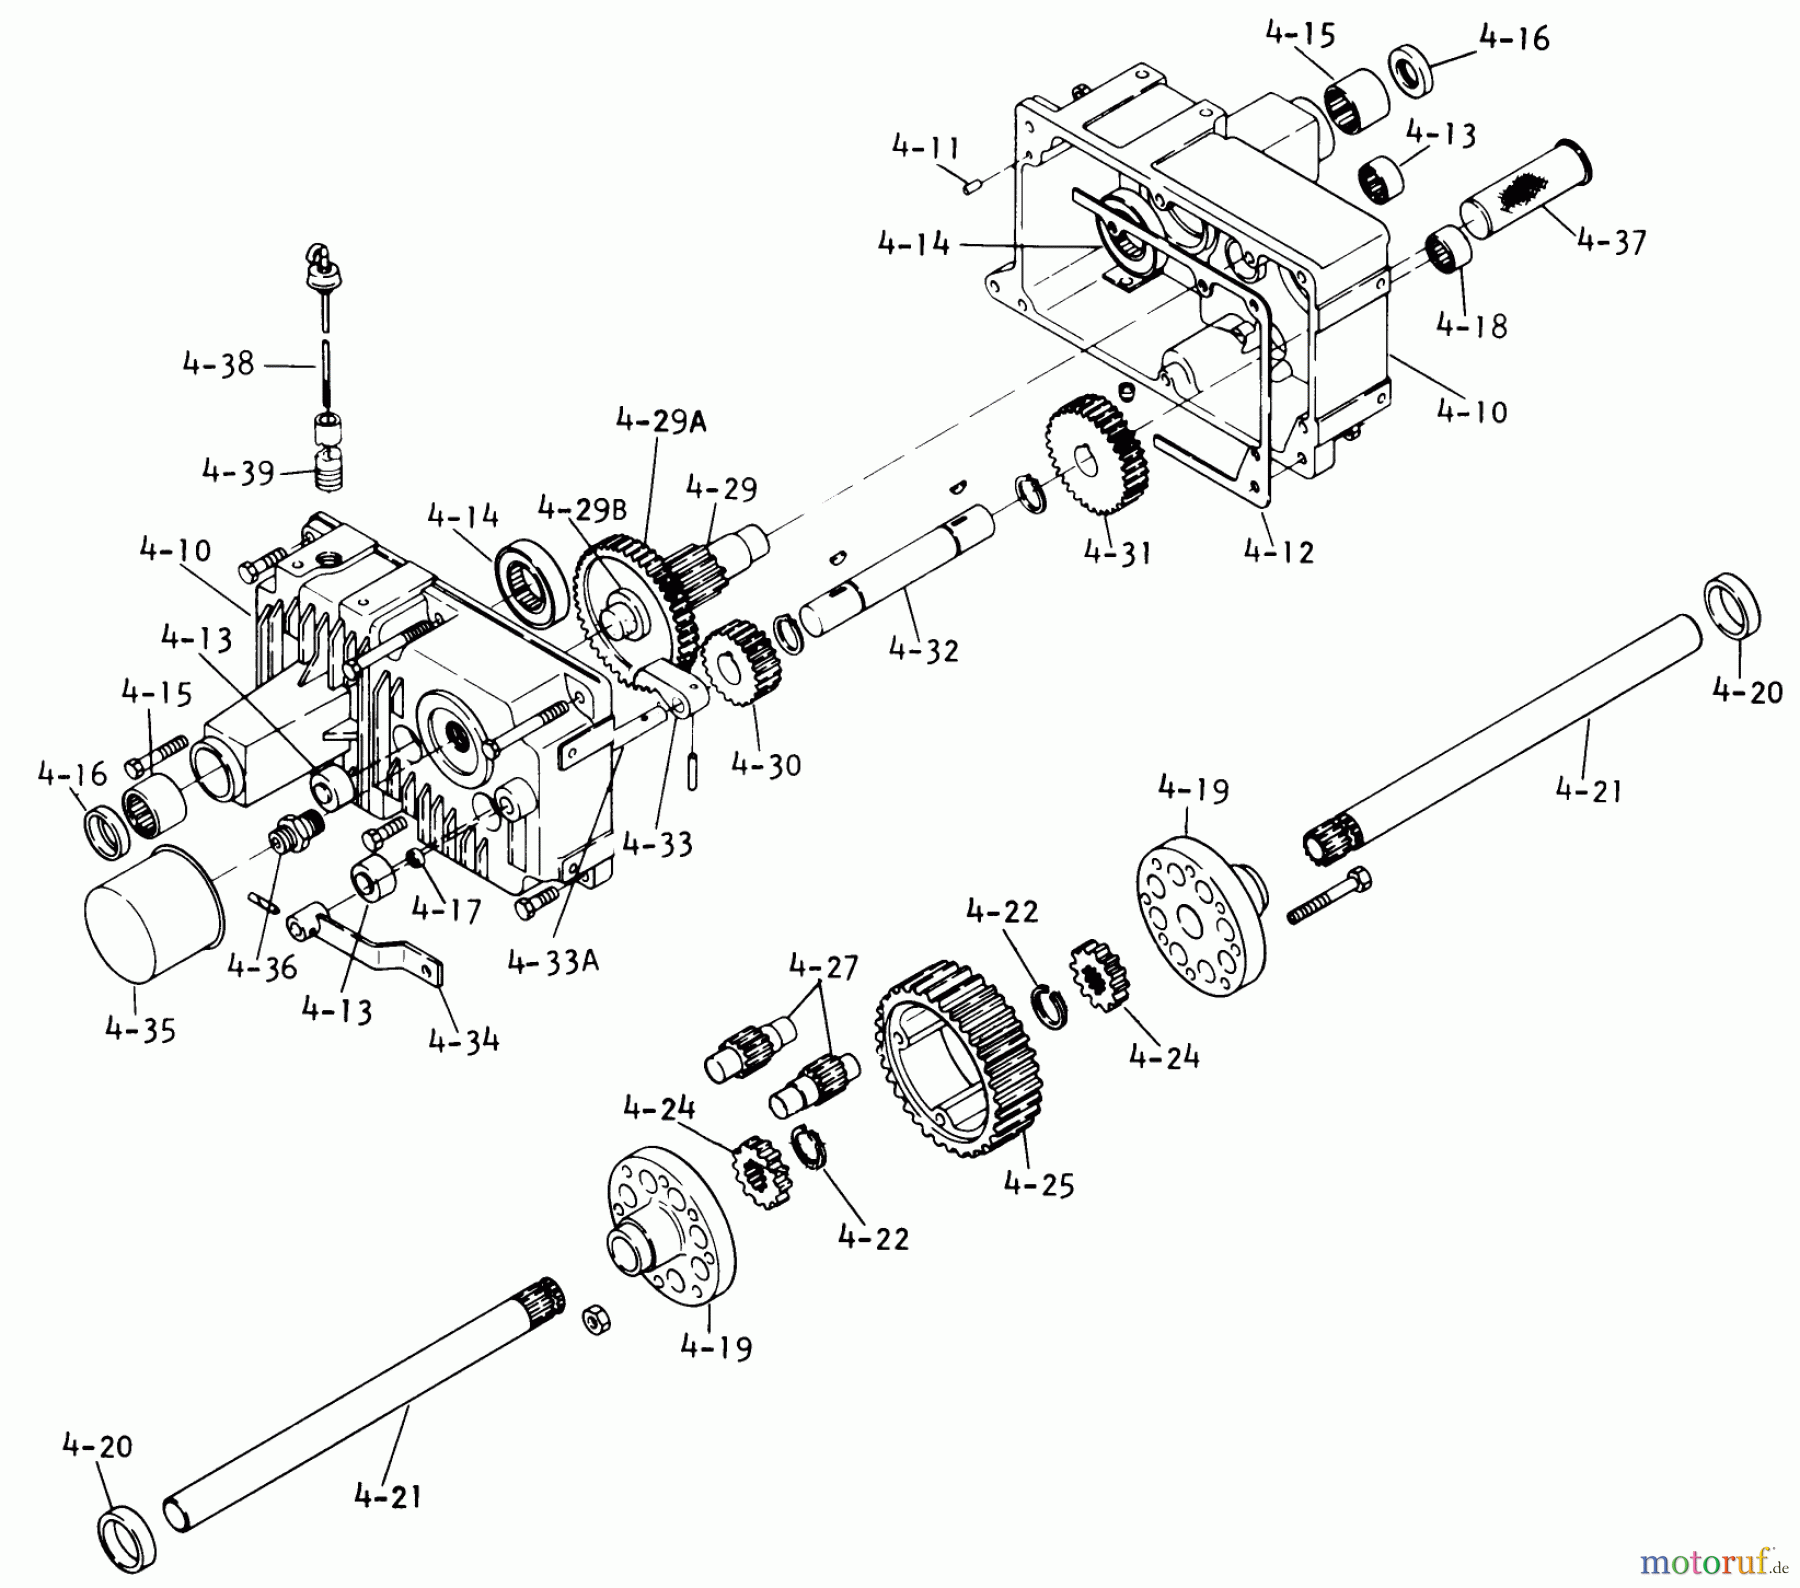  Toro Neu Mowers, Lawn & Garden Tractor Seite 1 1-0650 (D-160) - Toro D-160 Automatic Tractor, 1974 TRANSAXLE - COMPONENT PARTS (PLATE 4.010)